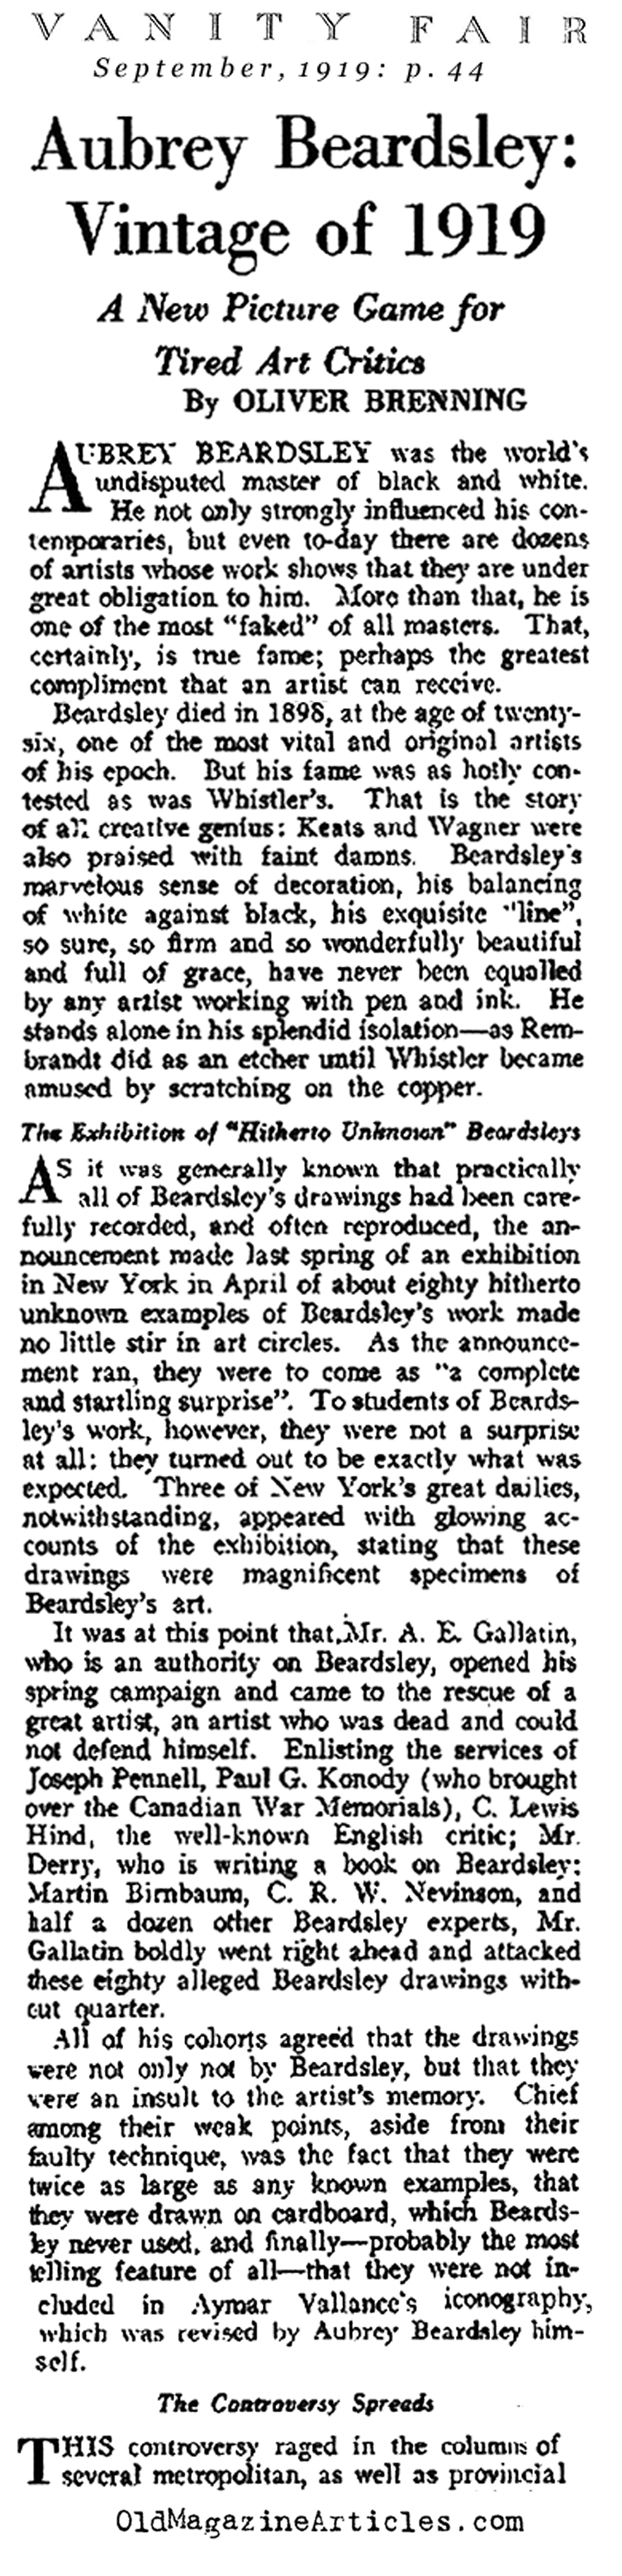 Art Sacandal: Aubrey Beardsley Forged (Vanity Fair, 1919)